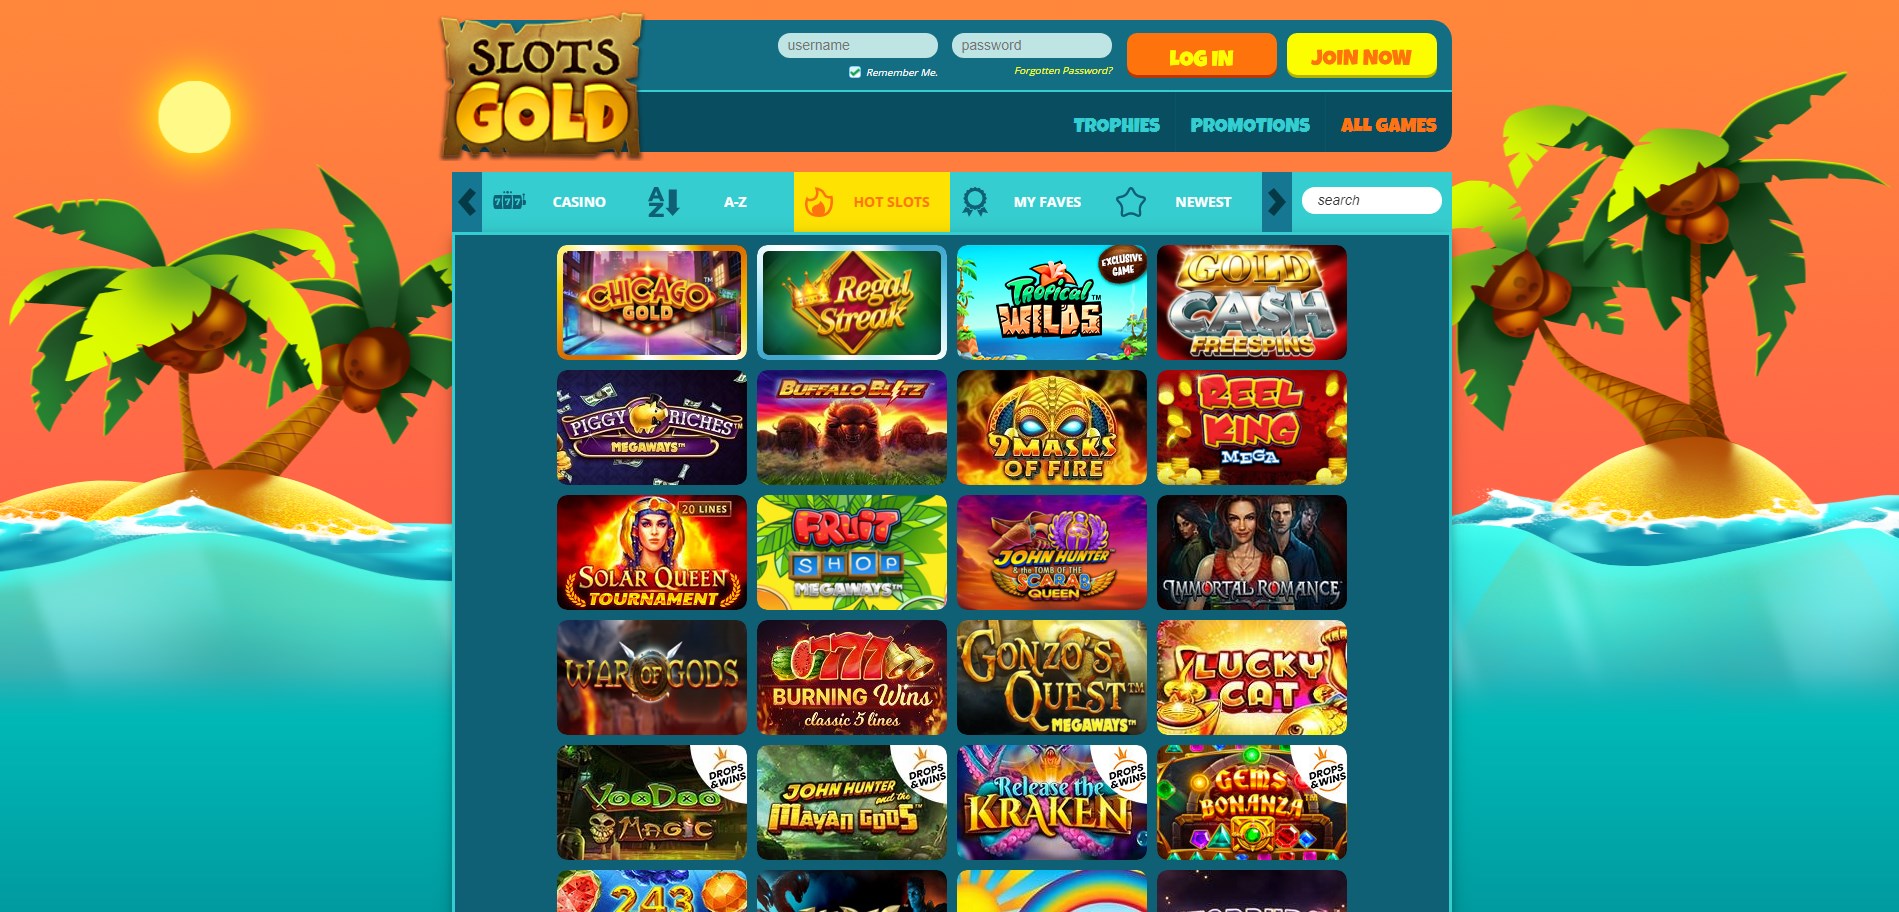 Slots Gold Casino Games